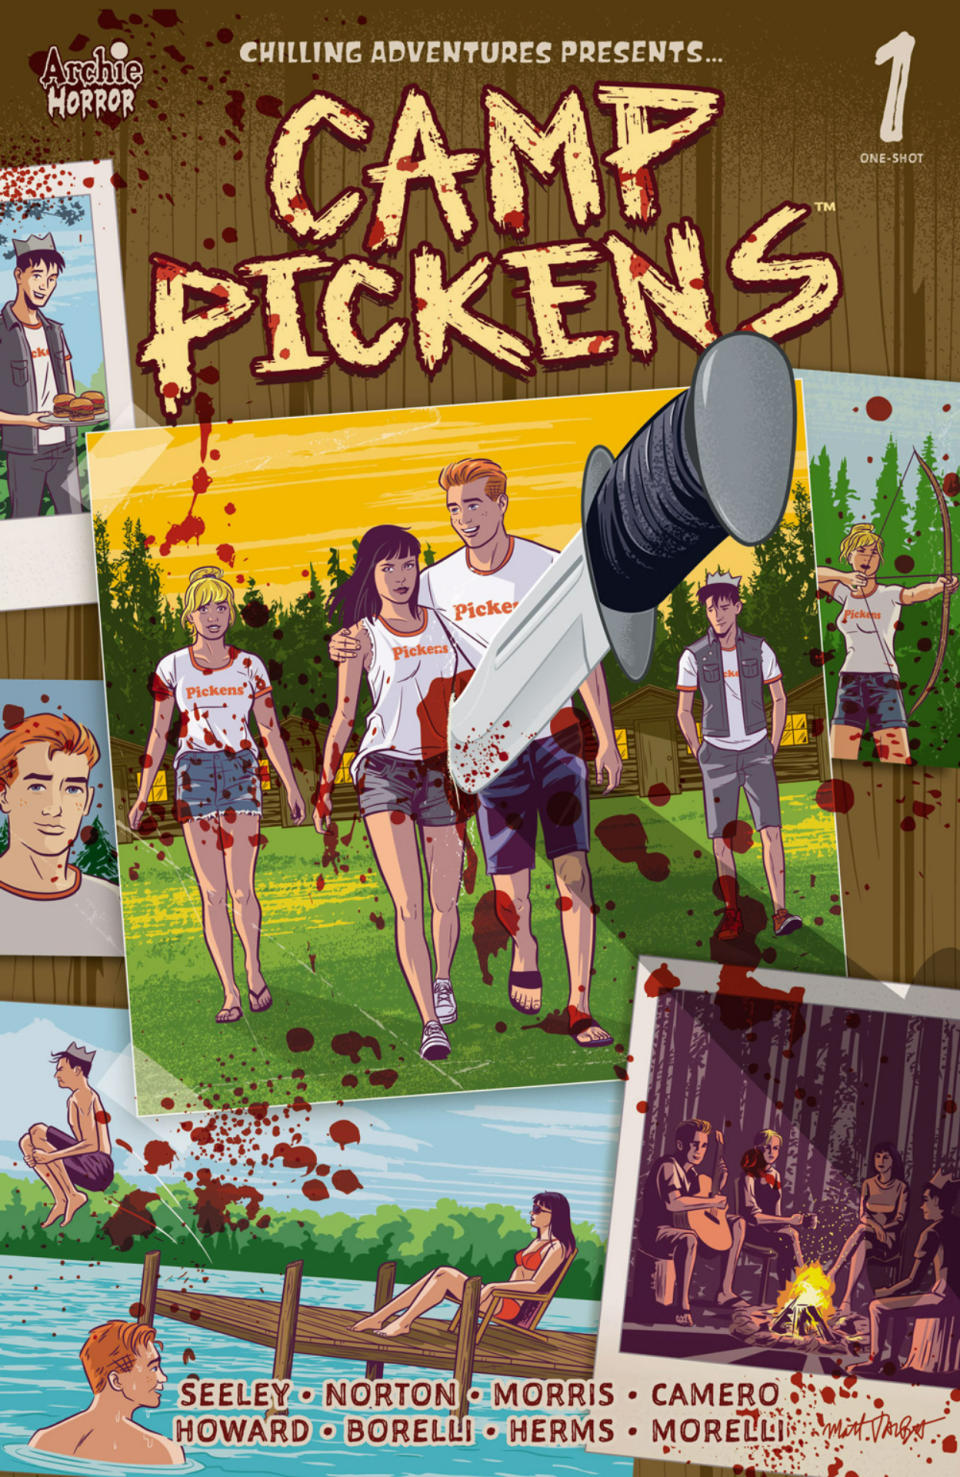 Archie Horror: Camp Perkins art